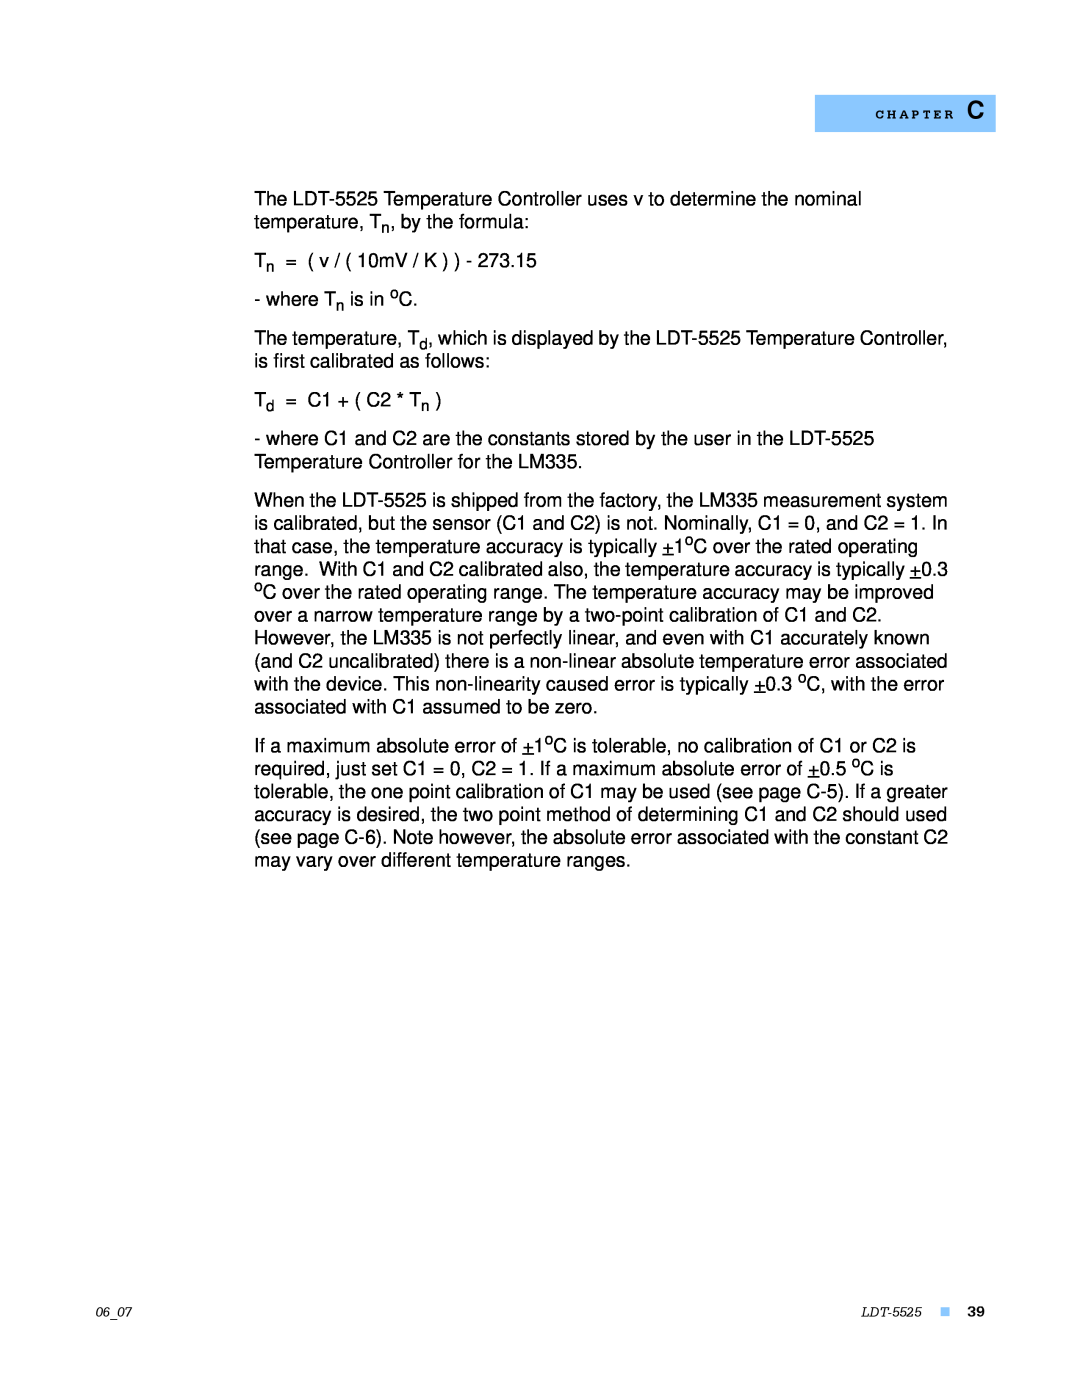 Lightwave Communications LDT-5525 manual Tn = v / 10mV / K - 273.15 - where Tn is in oC 